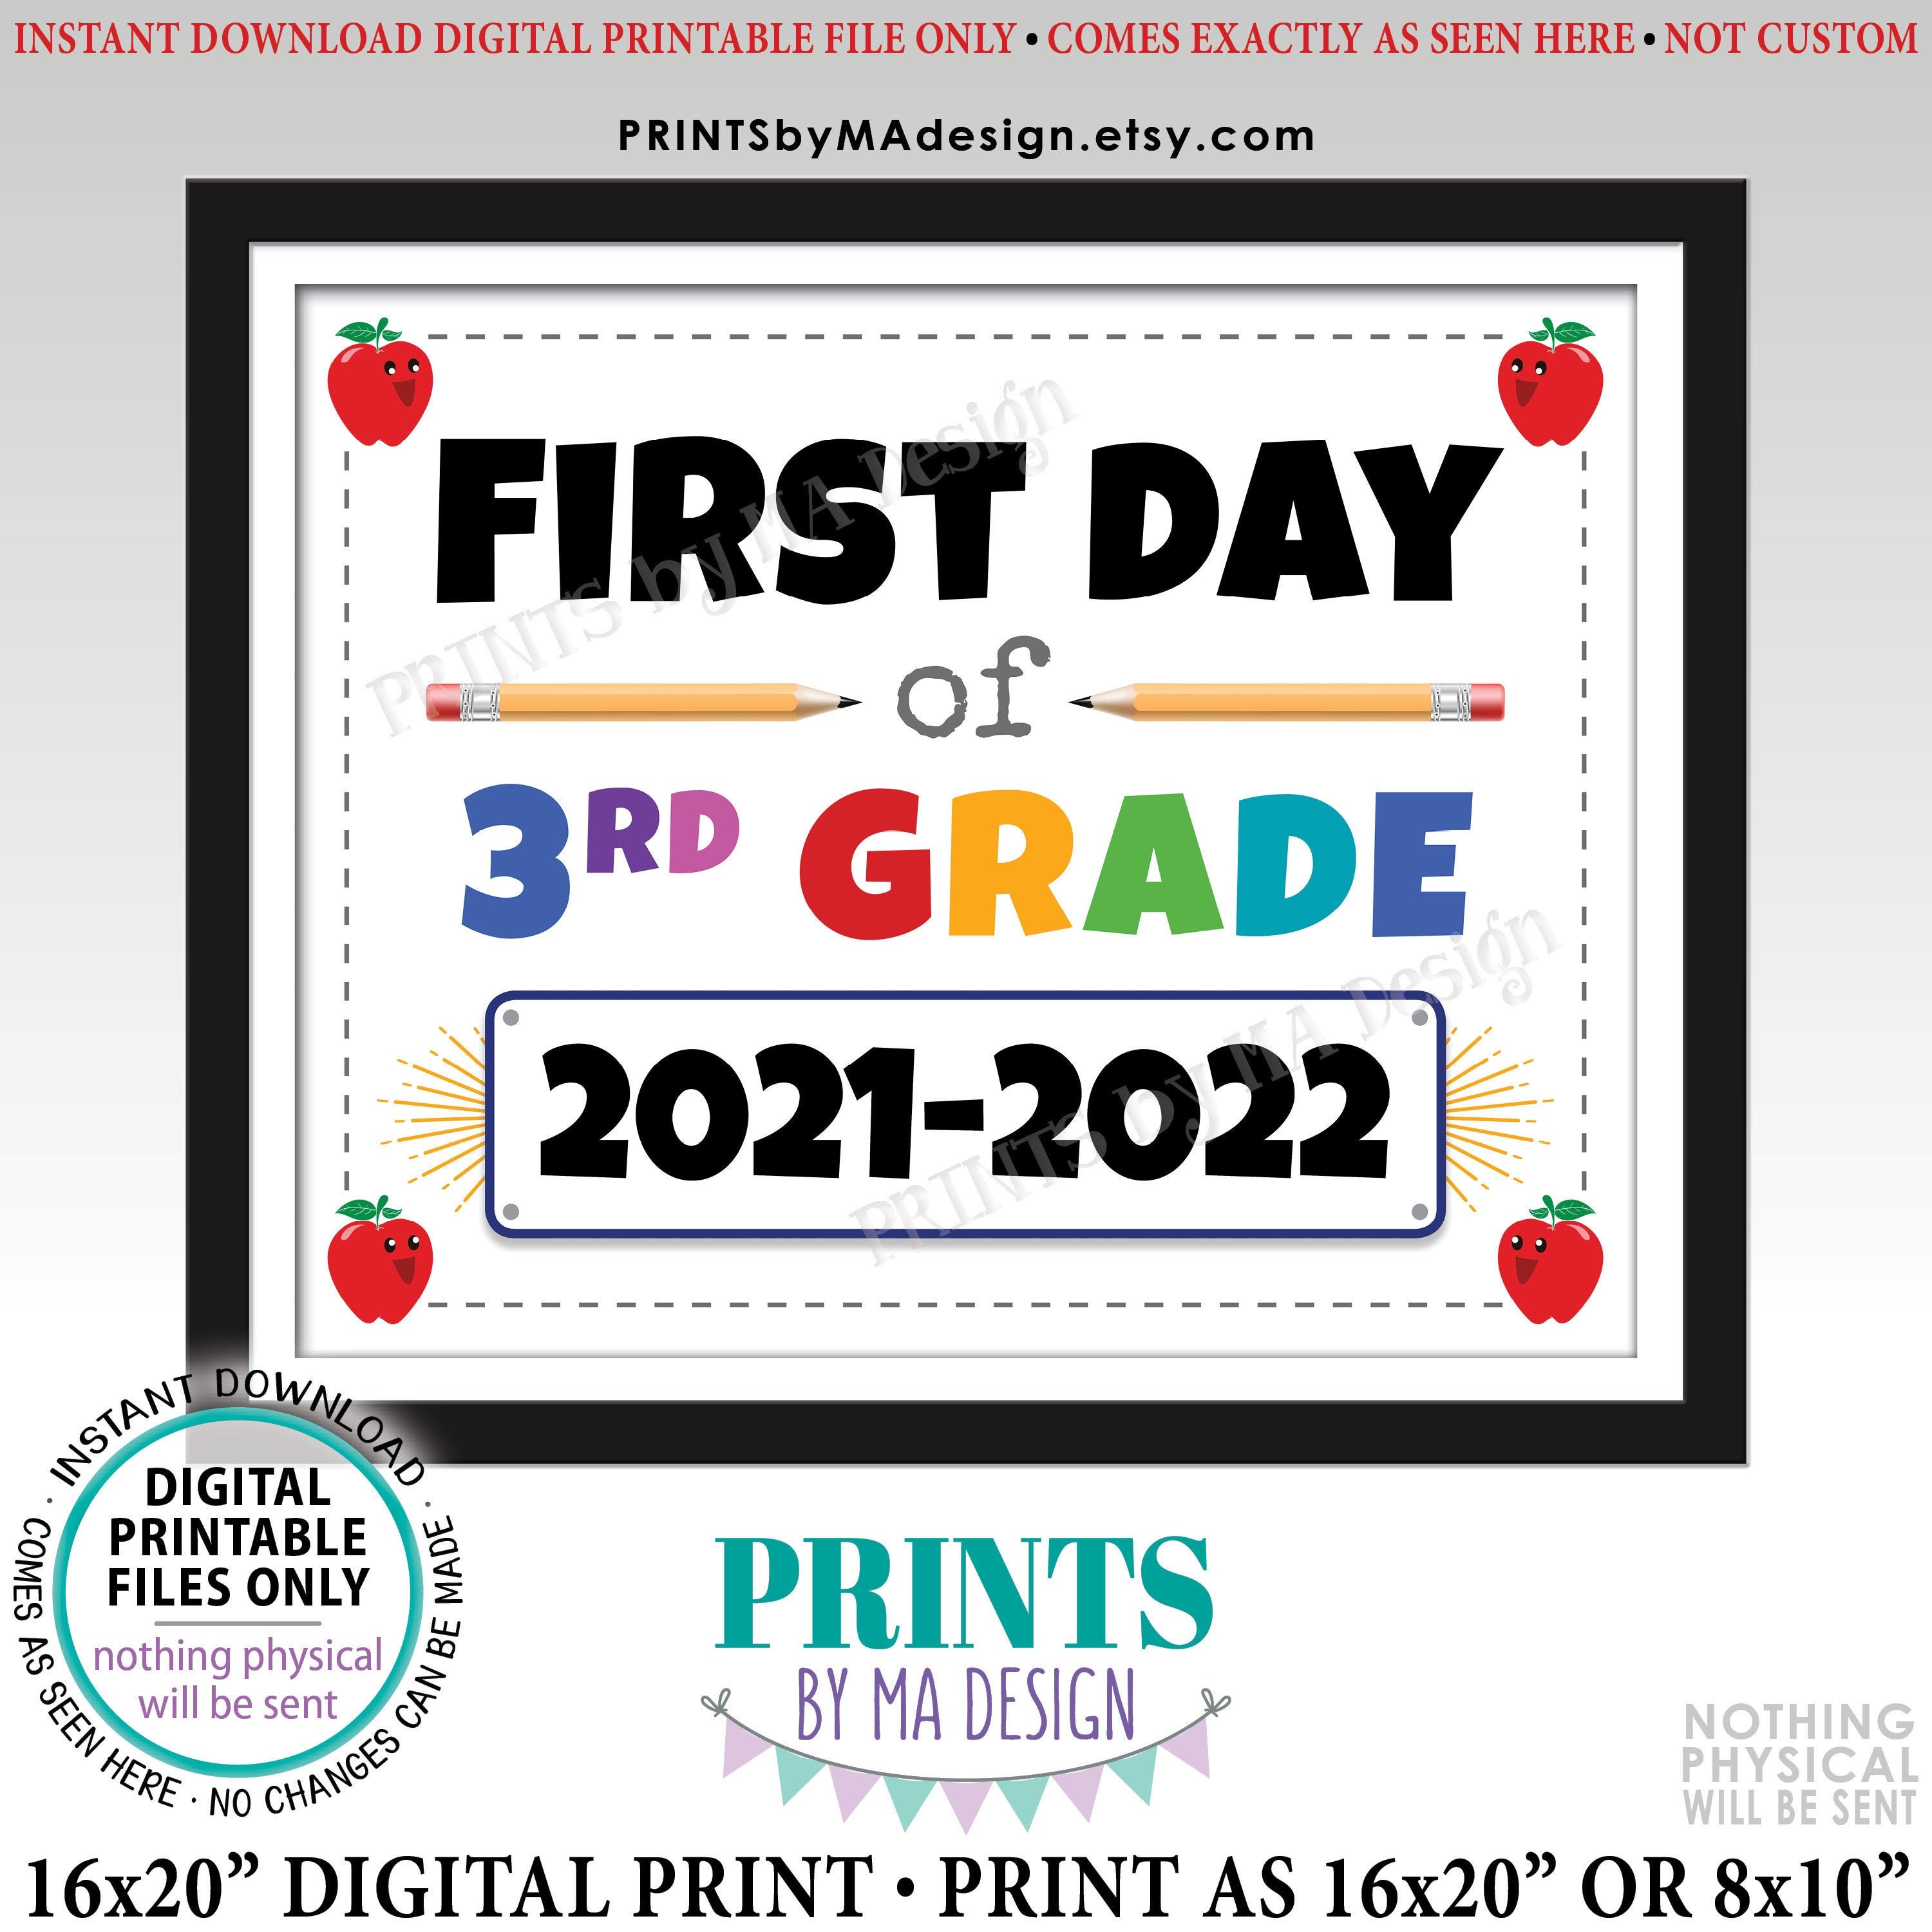 first-day-of-school-sign-third-grader-starting-3rd-grade-2021-2022